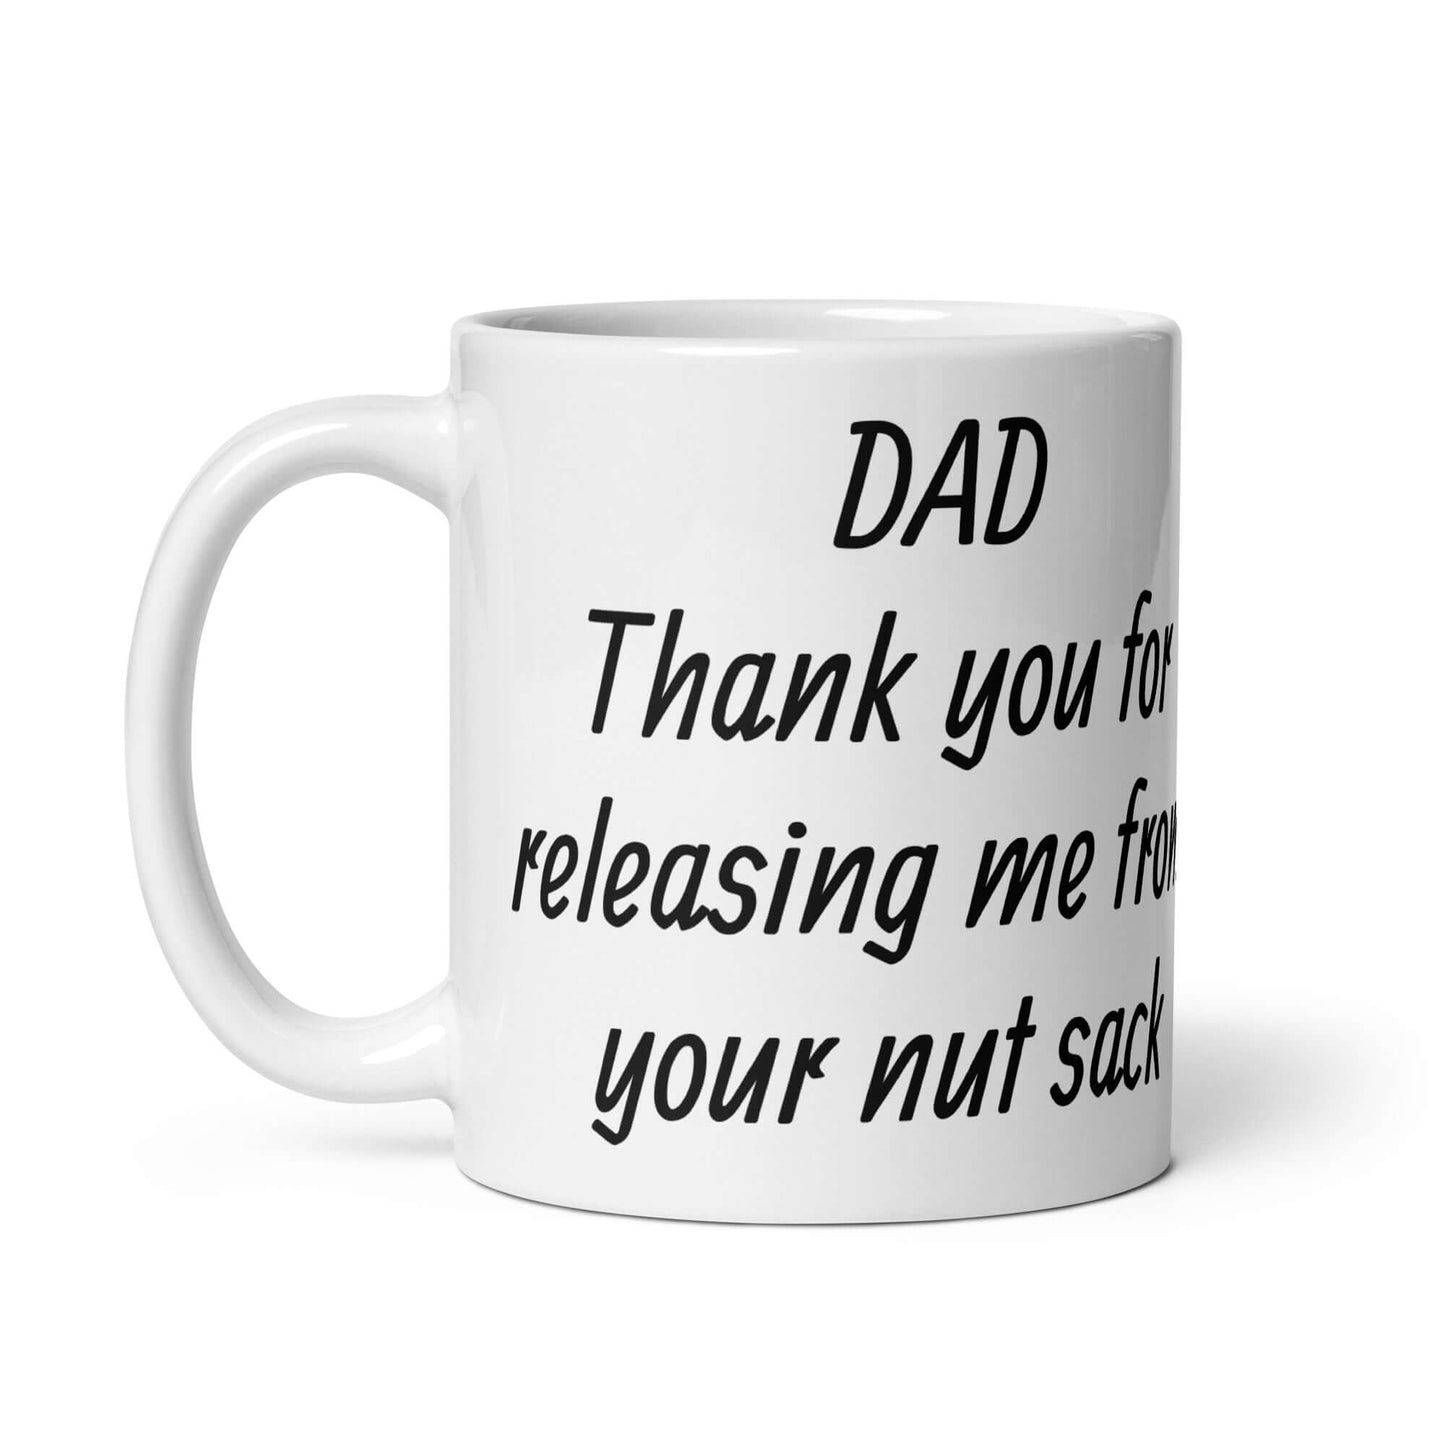 Super Dad - White glossy mug - Horrible Designs